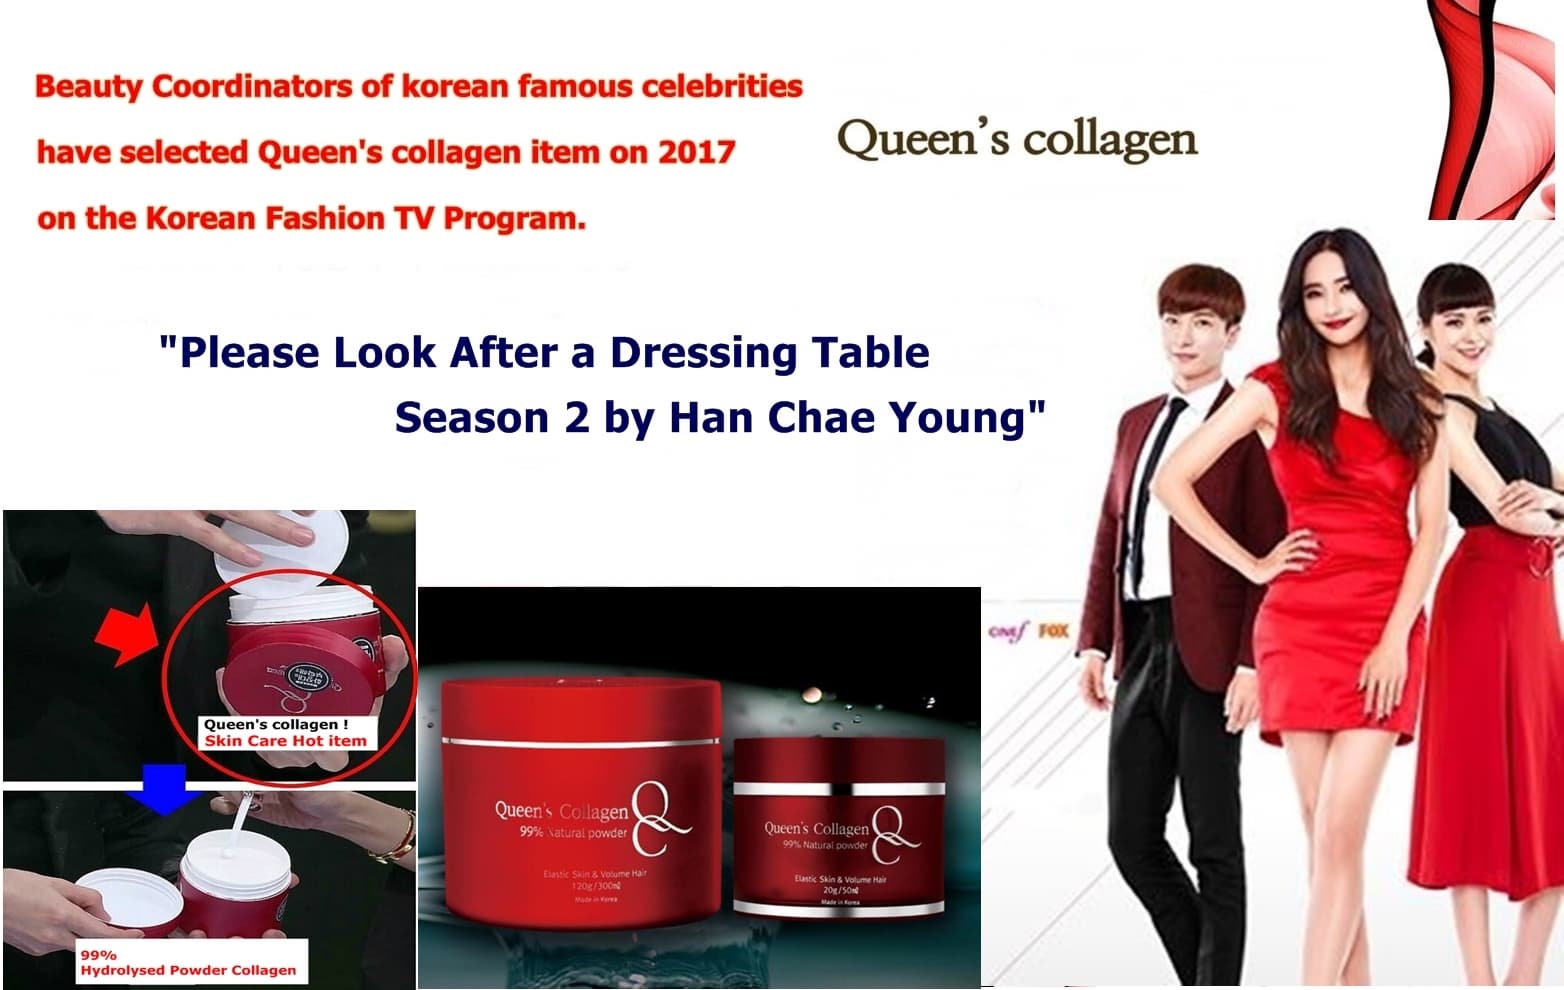 _Korea Skin care_Hydrolysed Powder Collagen